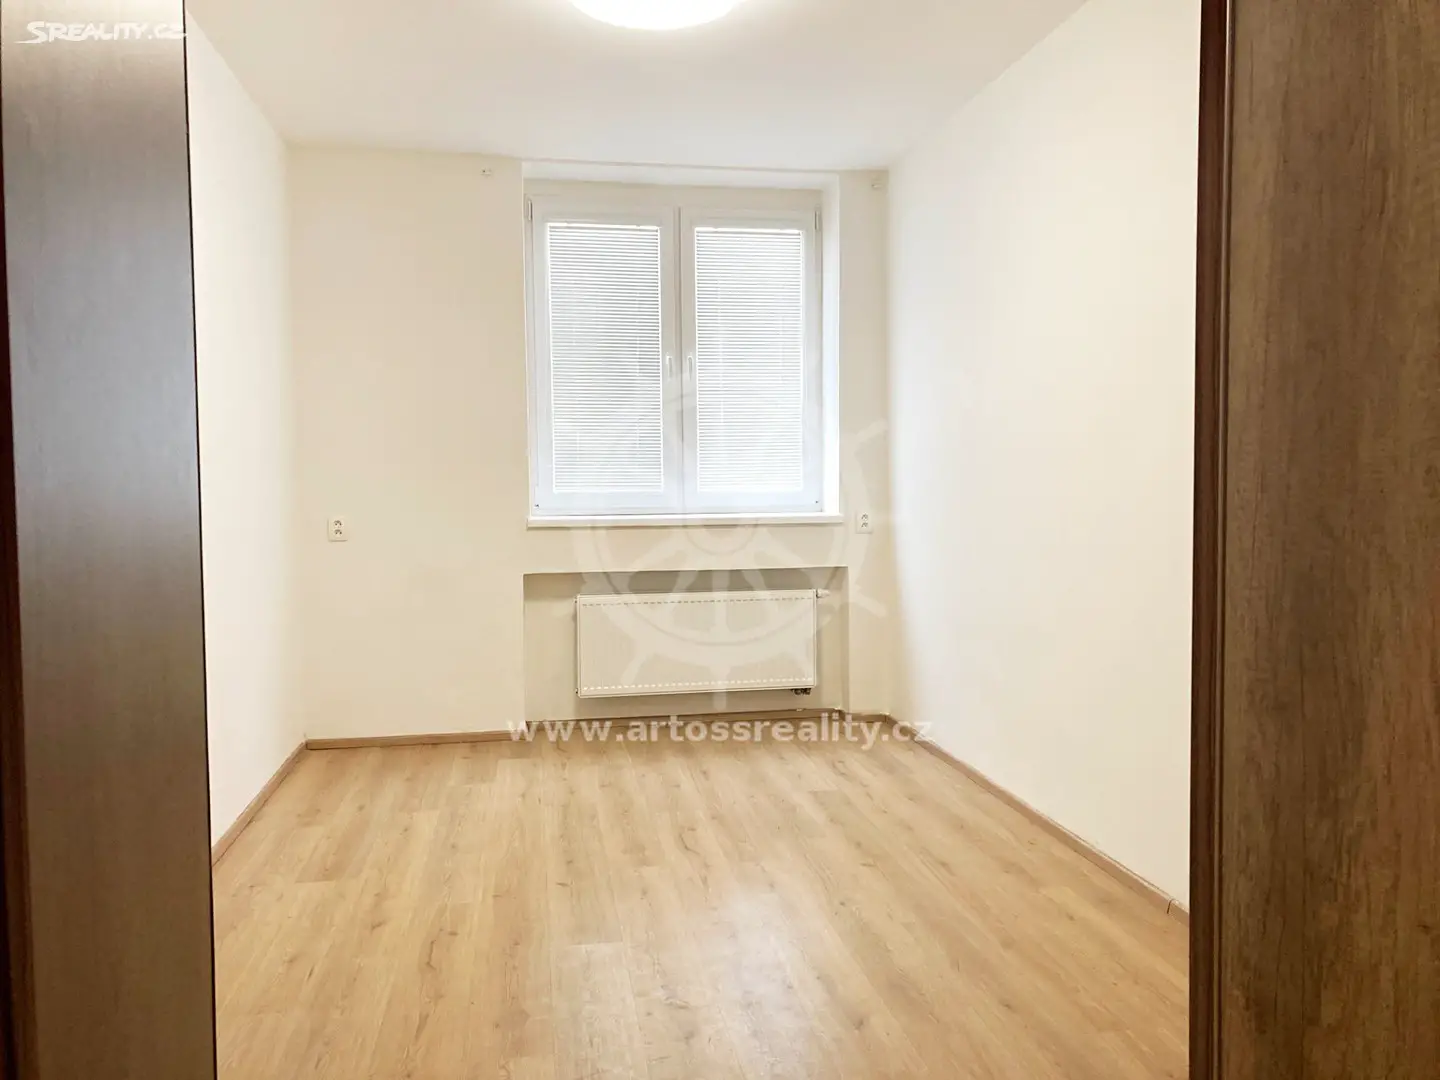 Pronájem bytu 3+1 61 m², Charbulova, Brno - Černovice